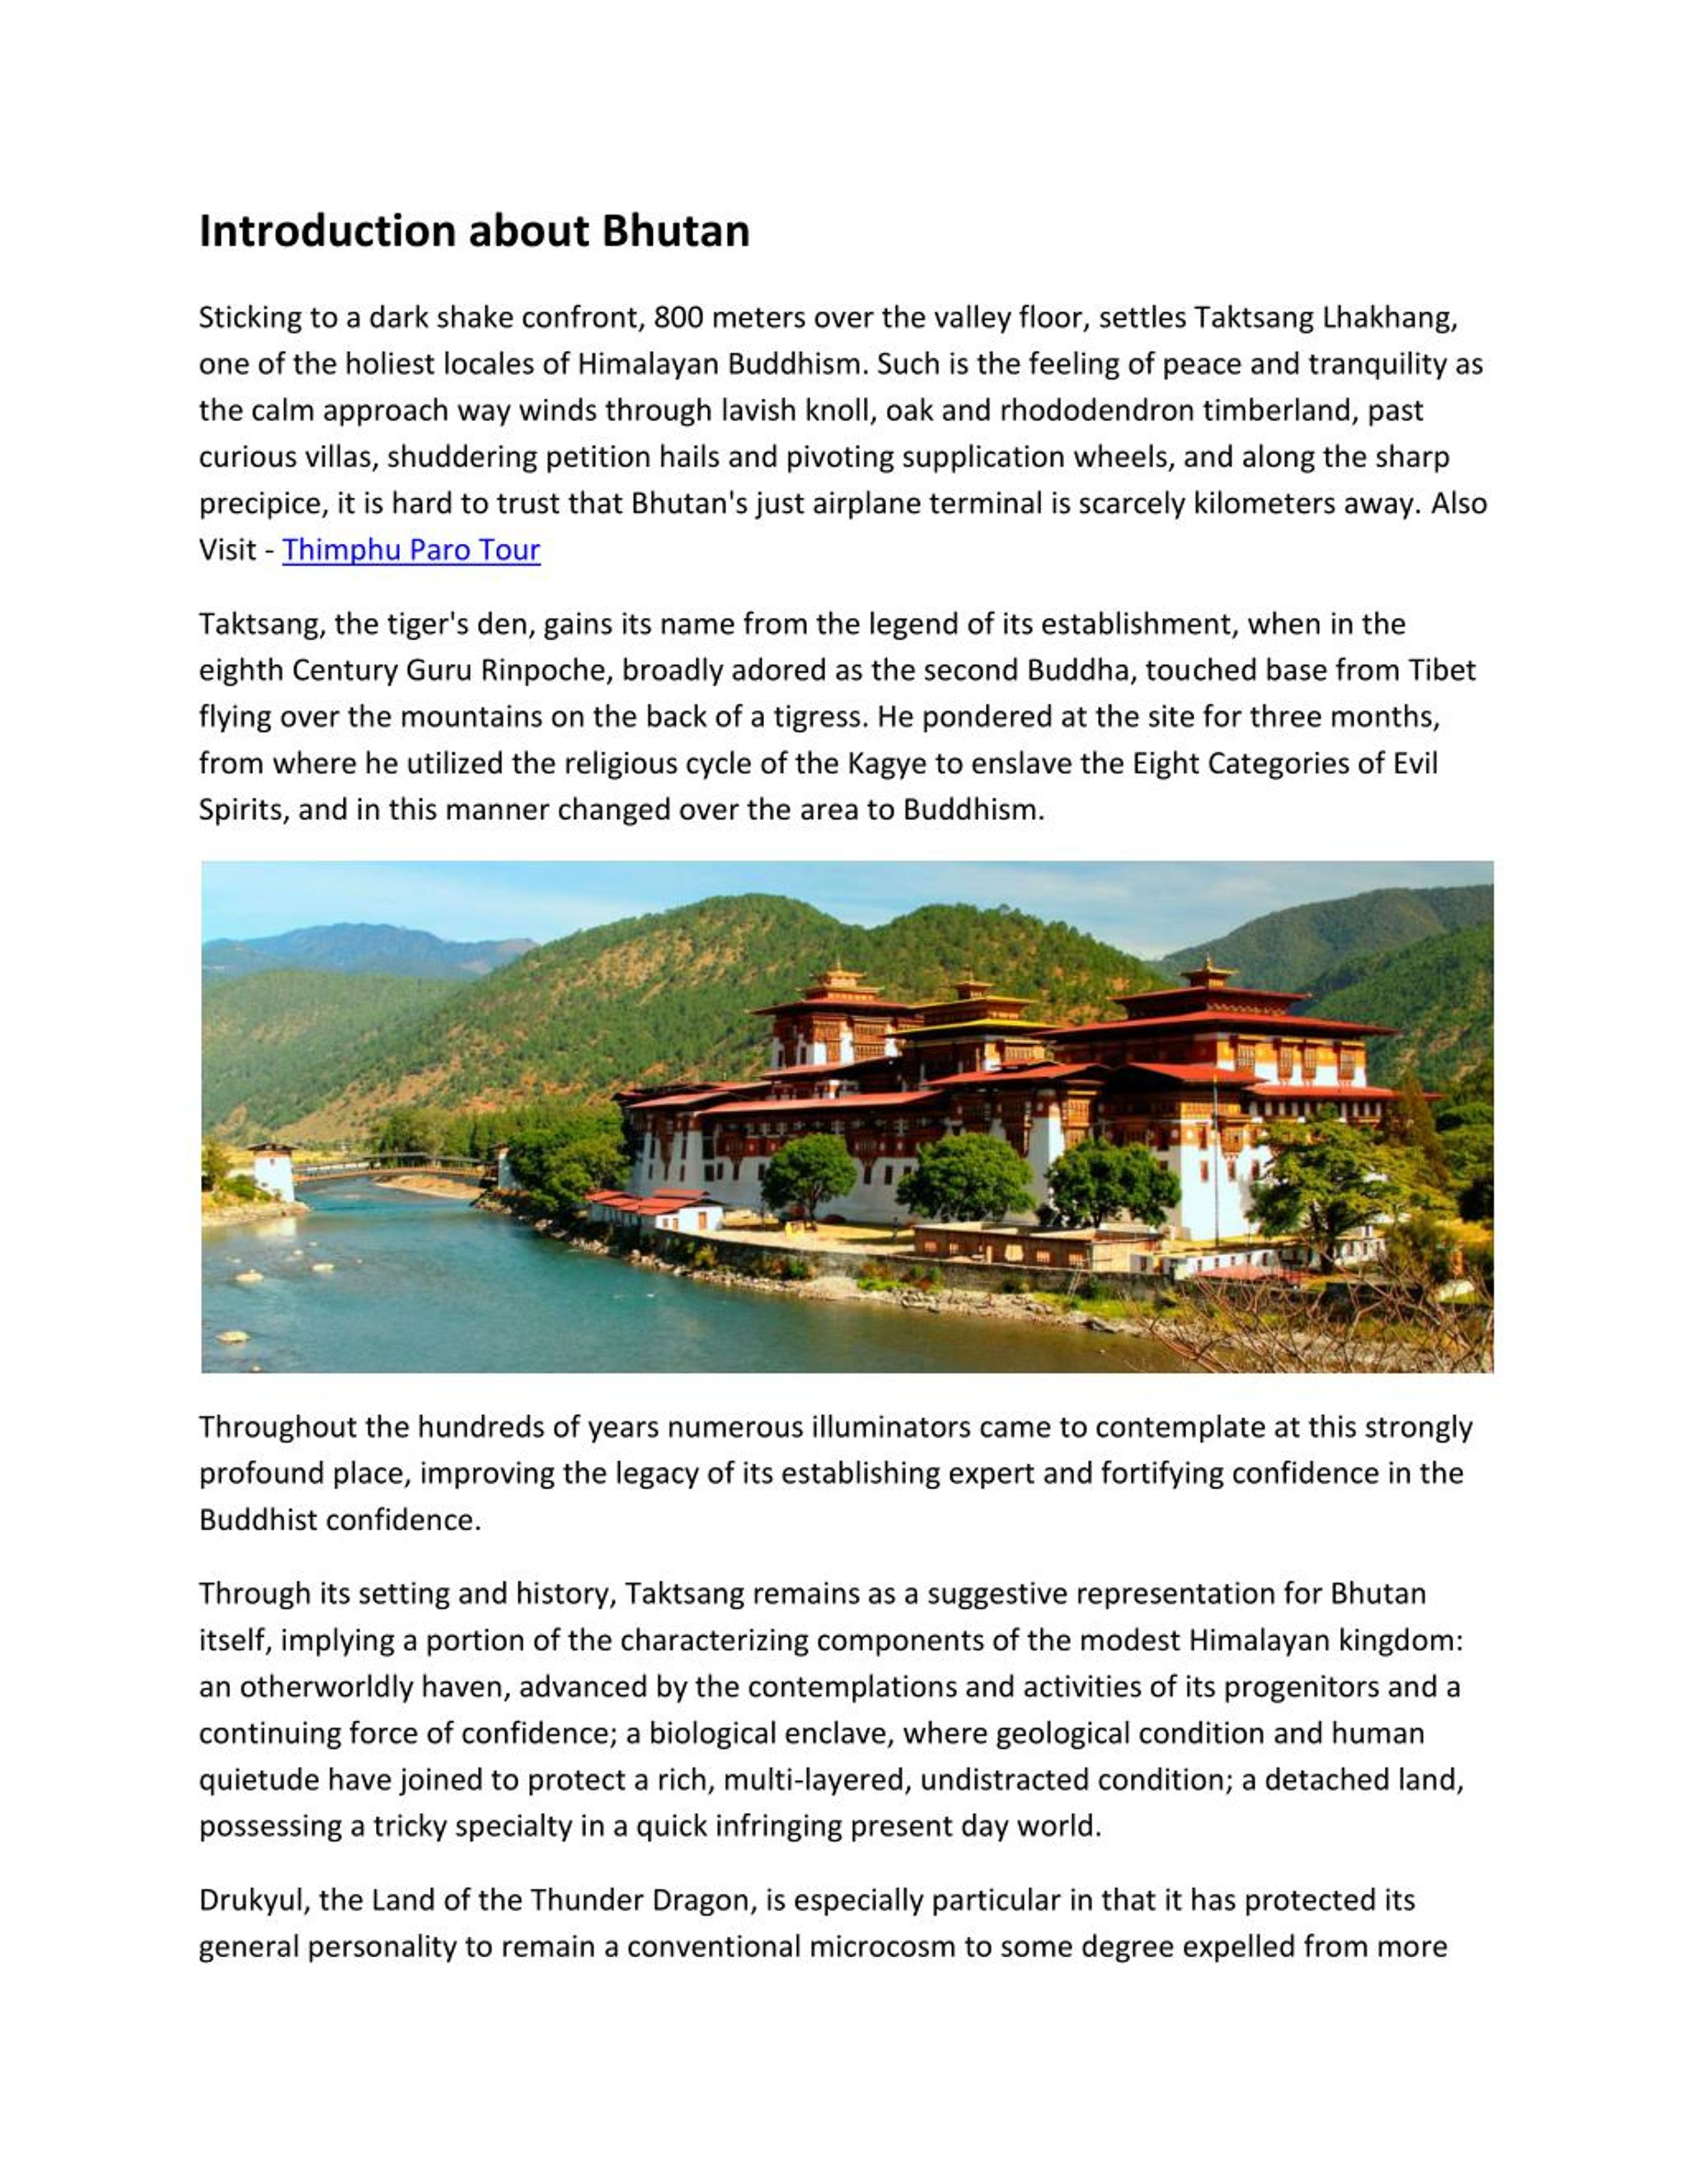 essay on country bhutan